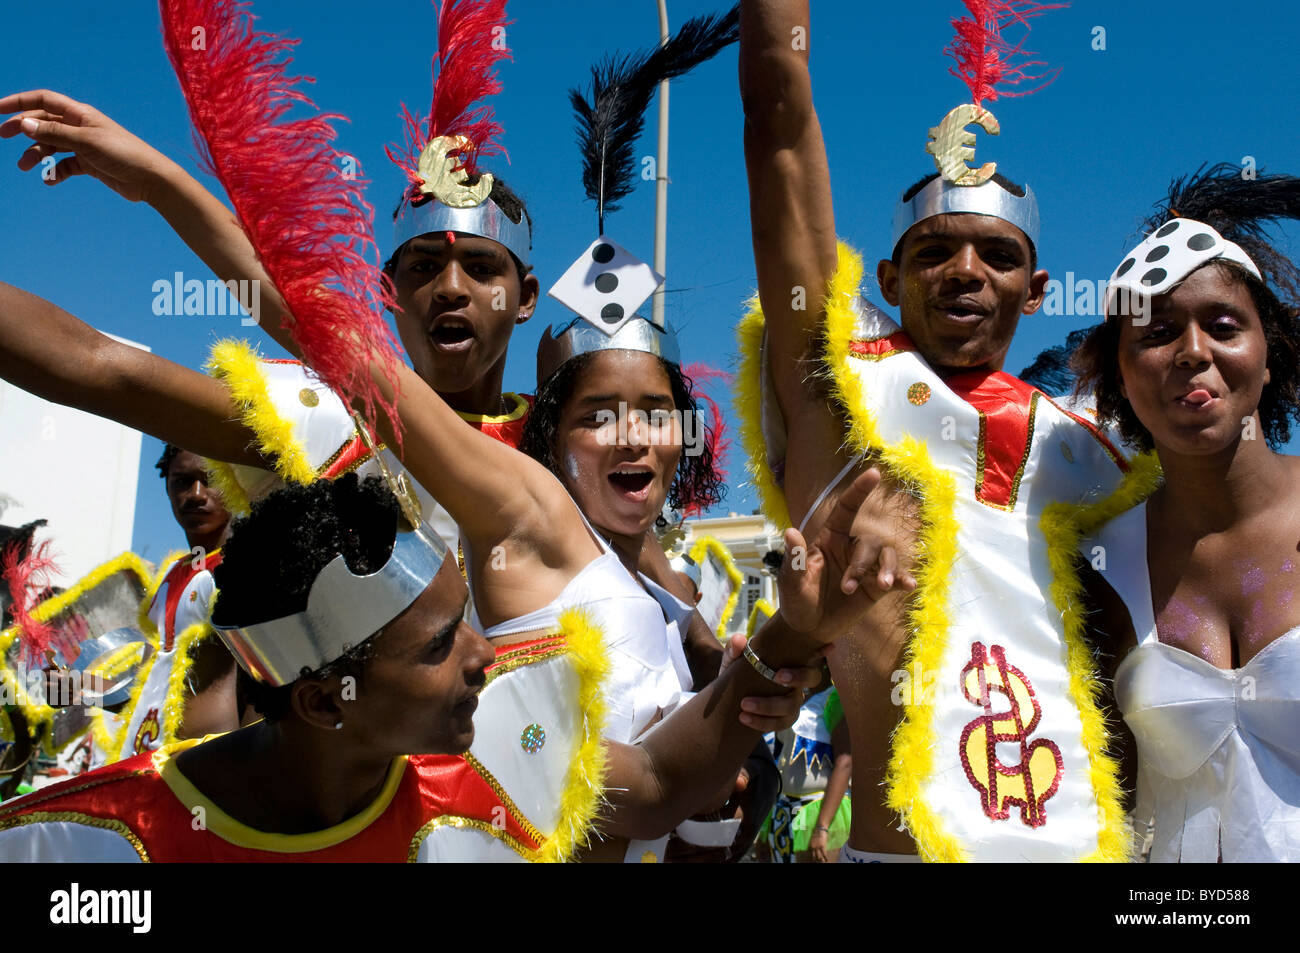 Costumed people celebrating Carnival, Mindelo, Cape Verde, Cabo Verde, Africa Stock Photo